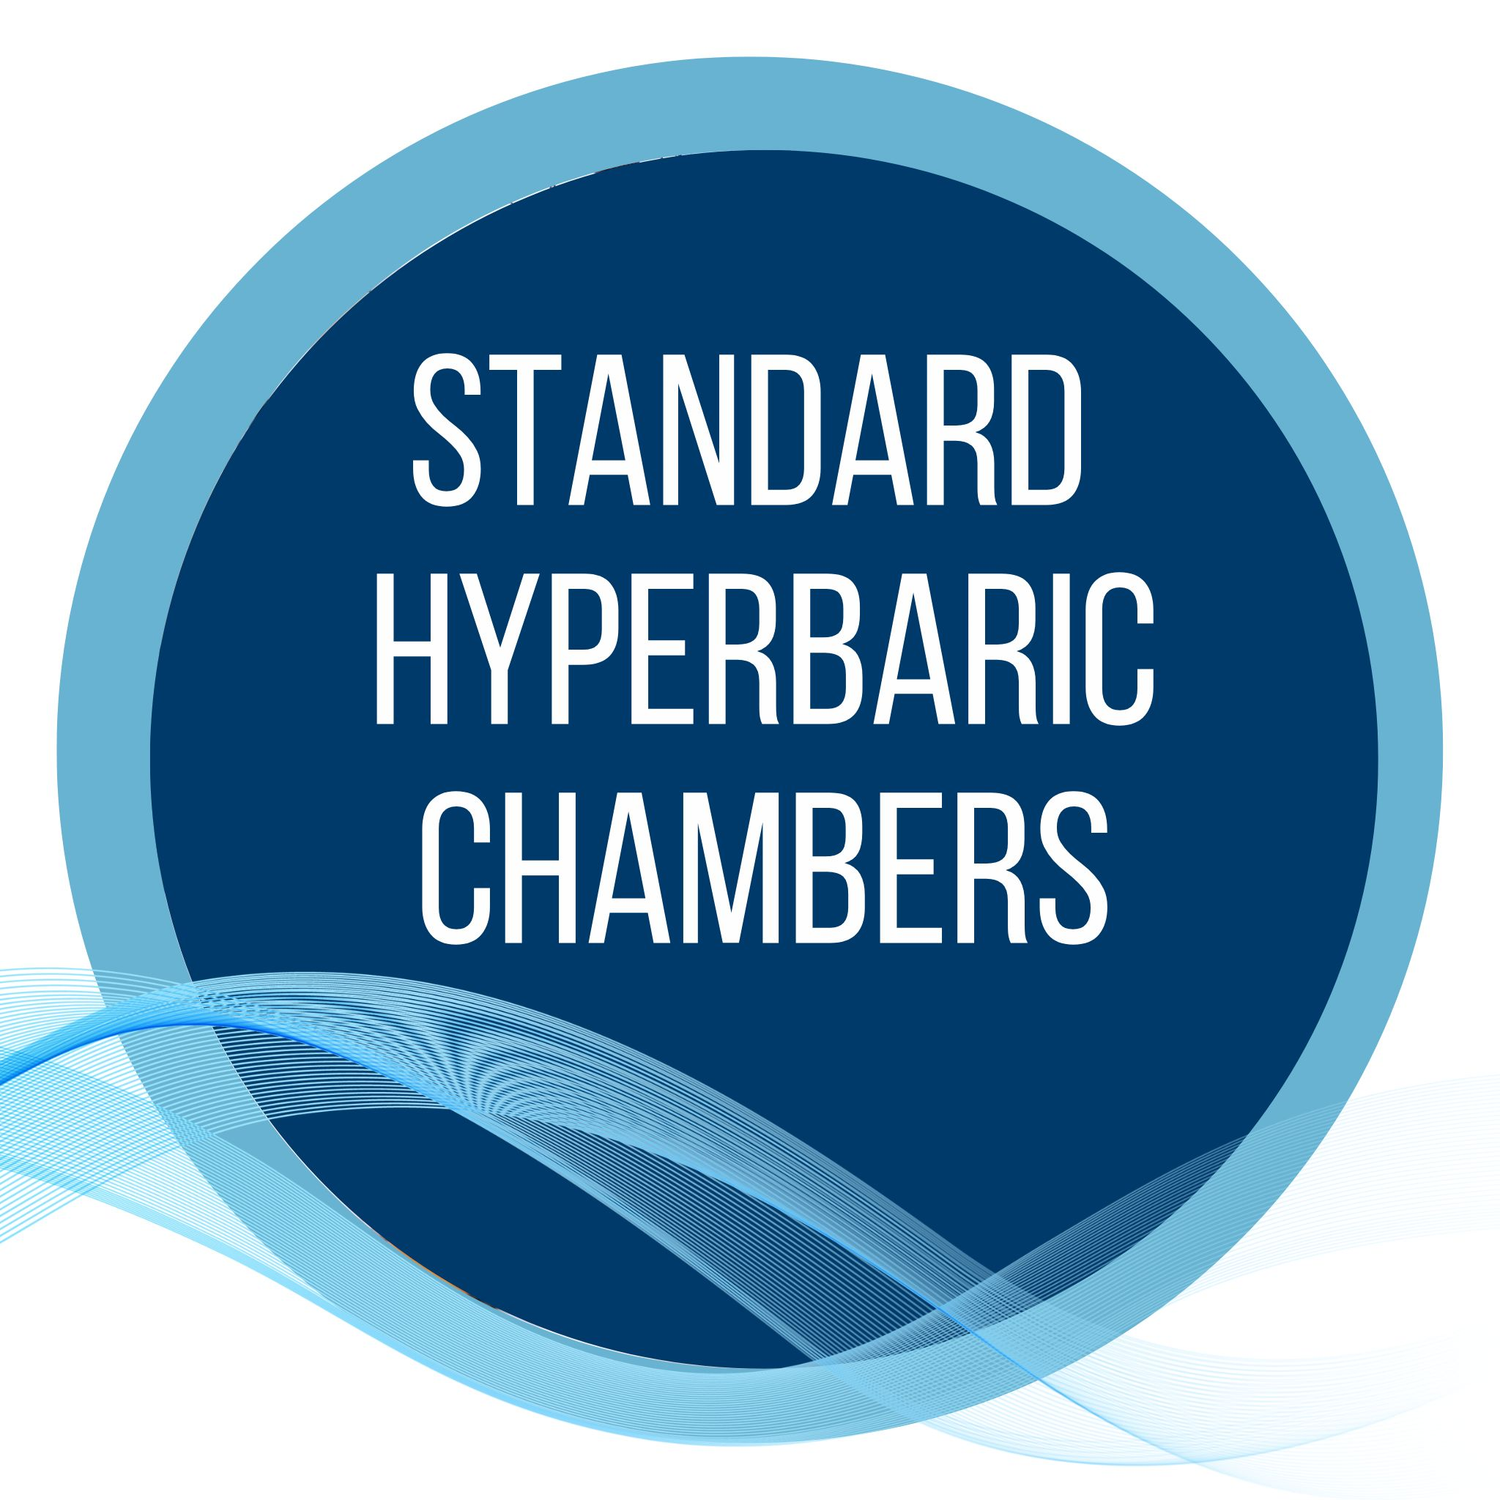 Standard Hyperbaric Chambers